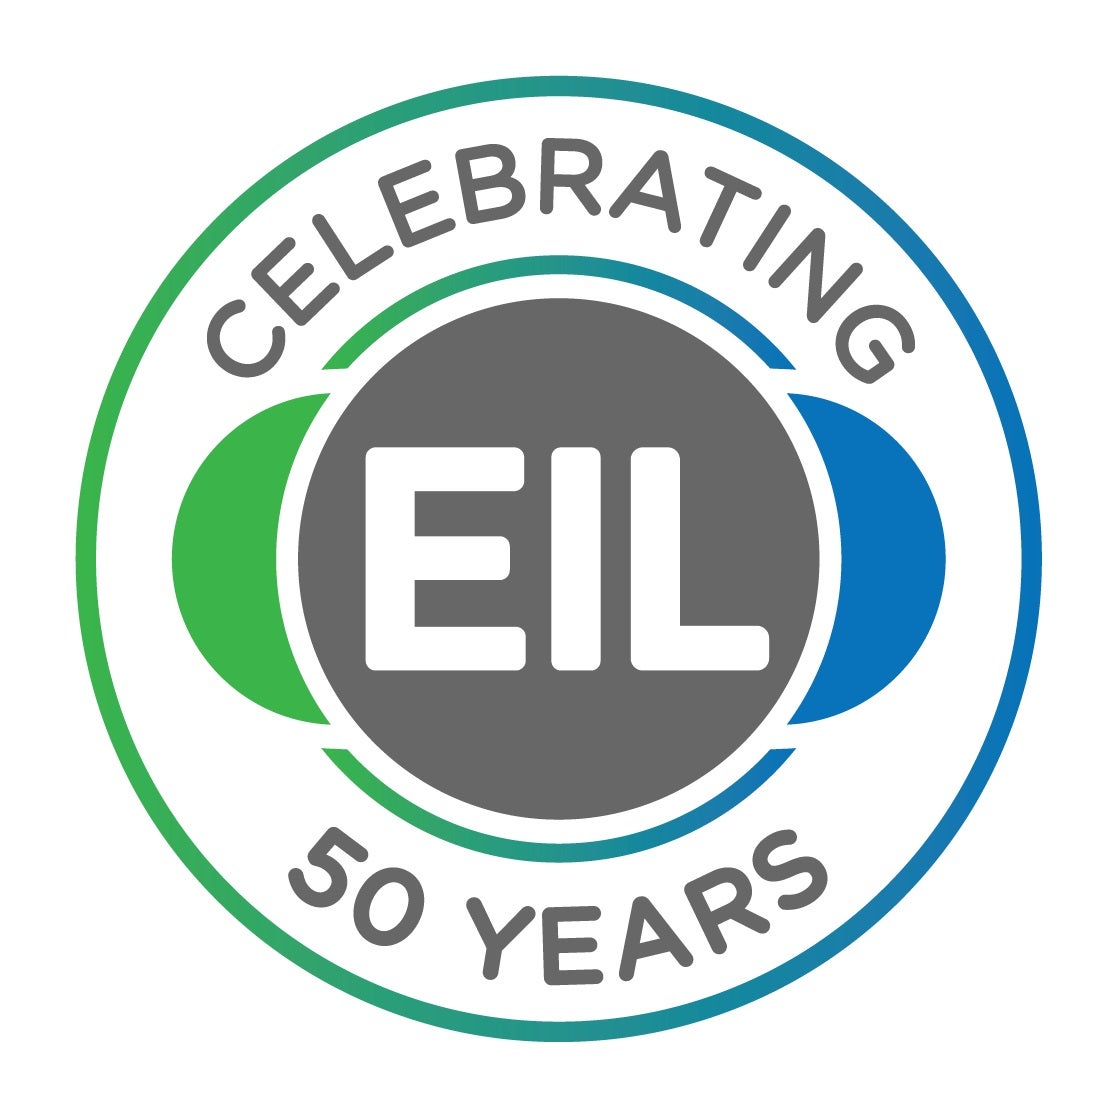 EIL badge celebrating 50 years